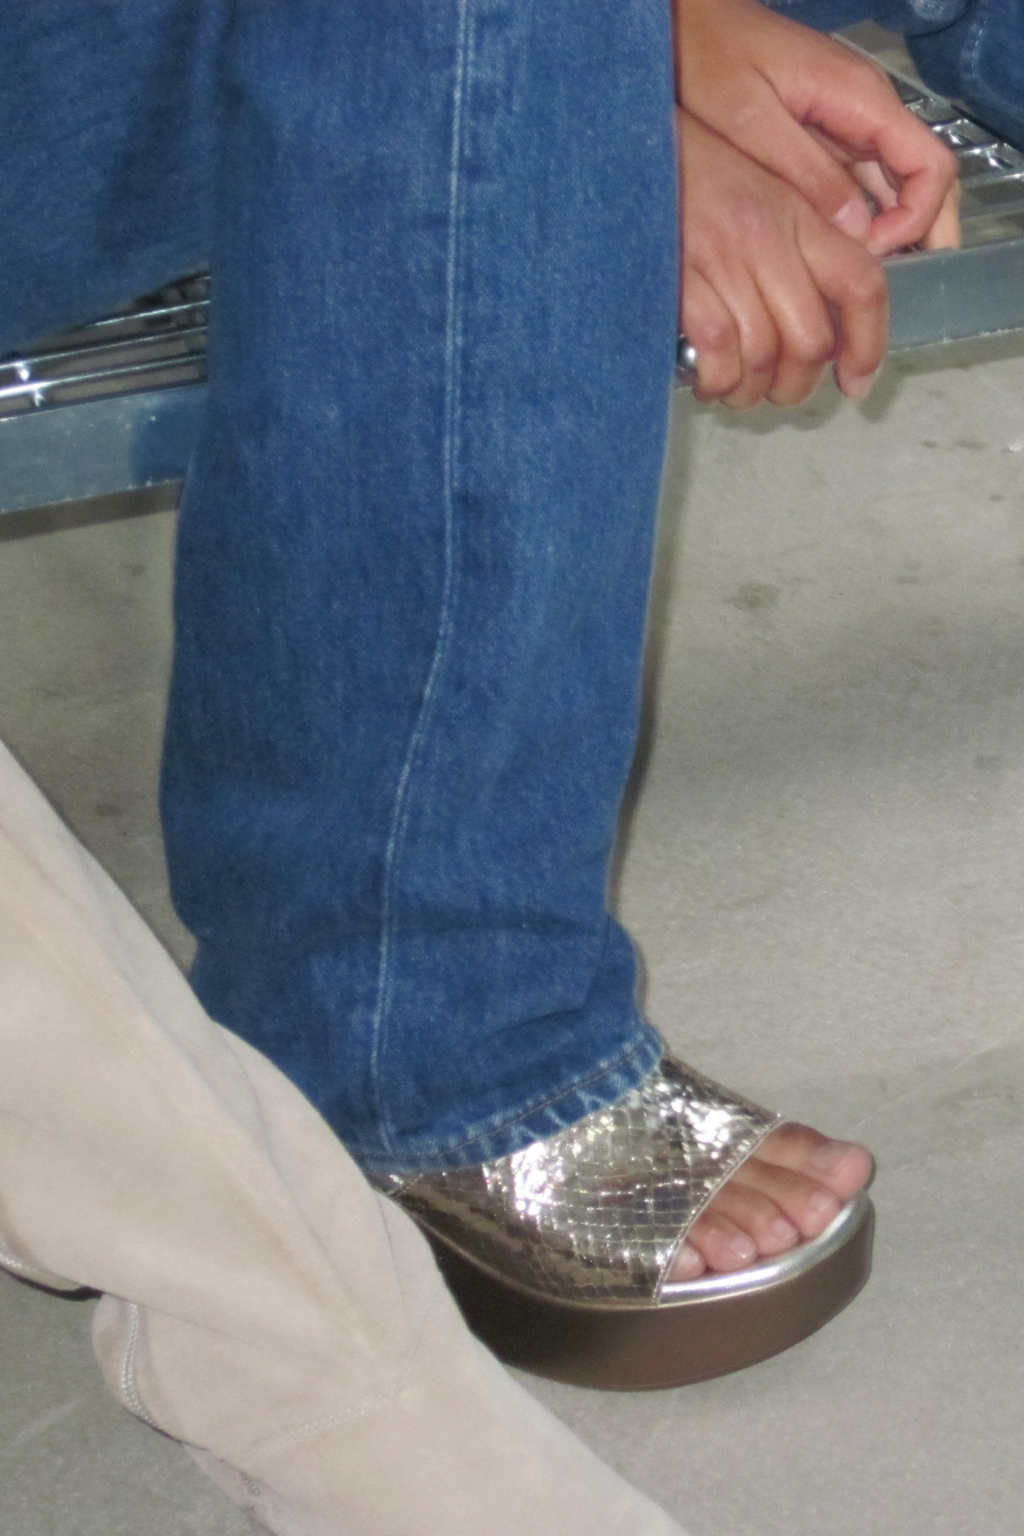 Silver Platform Shoes